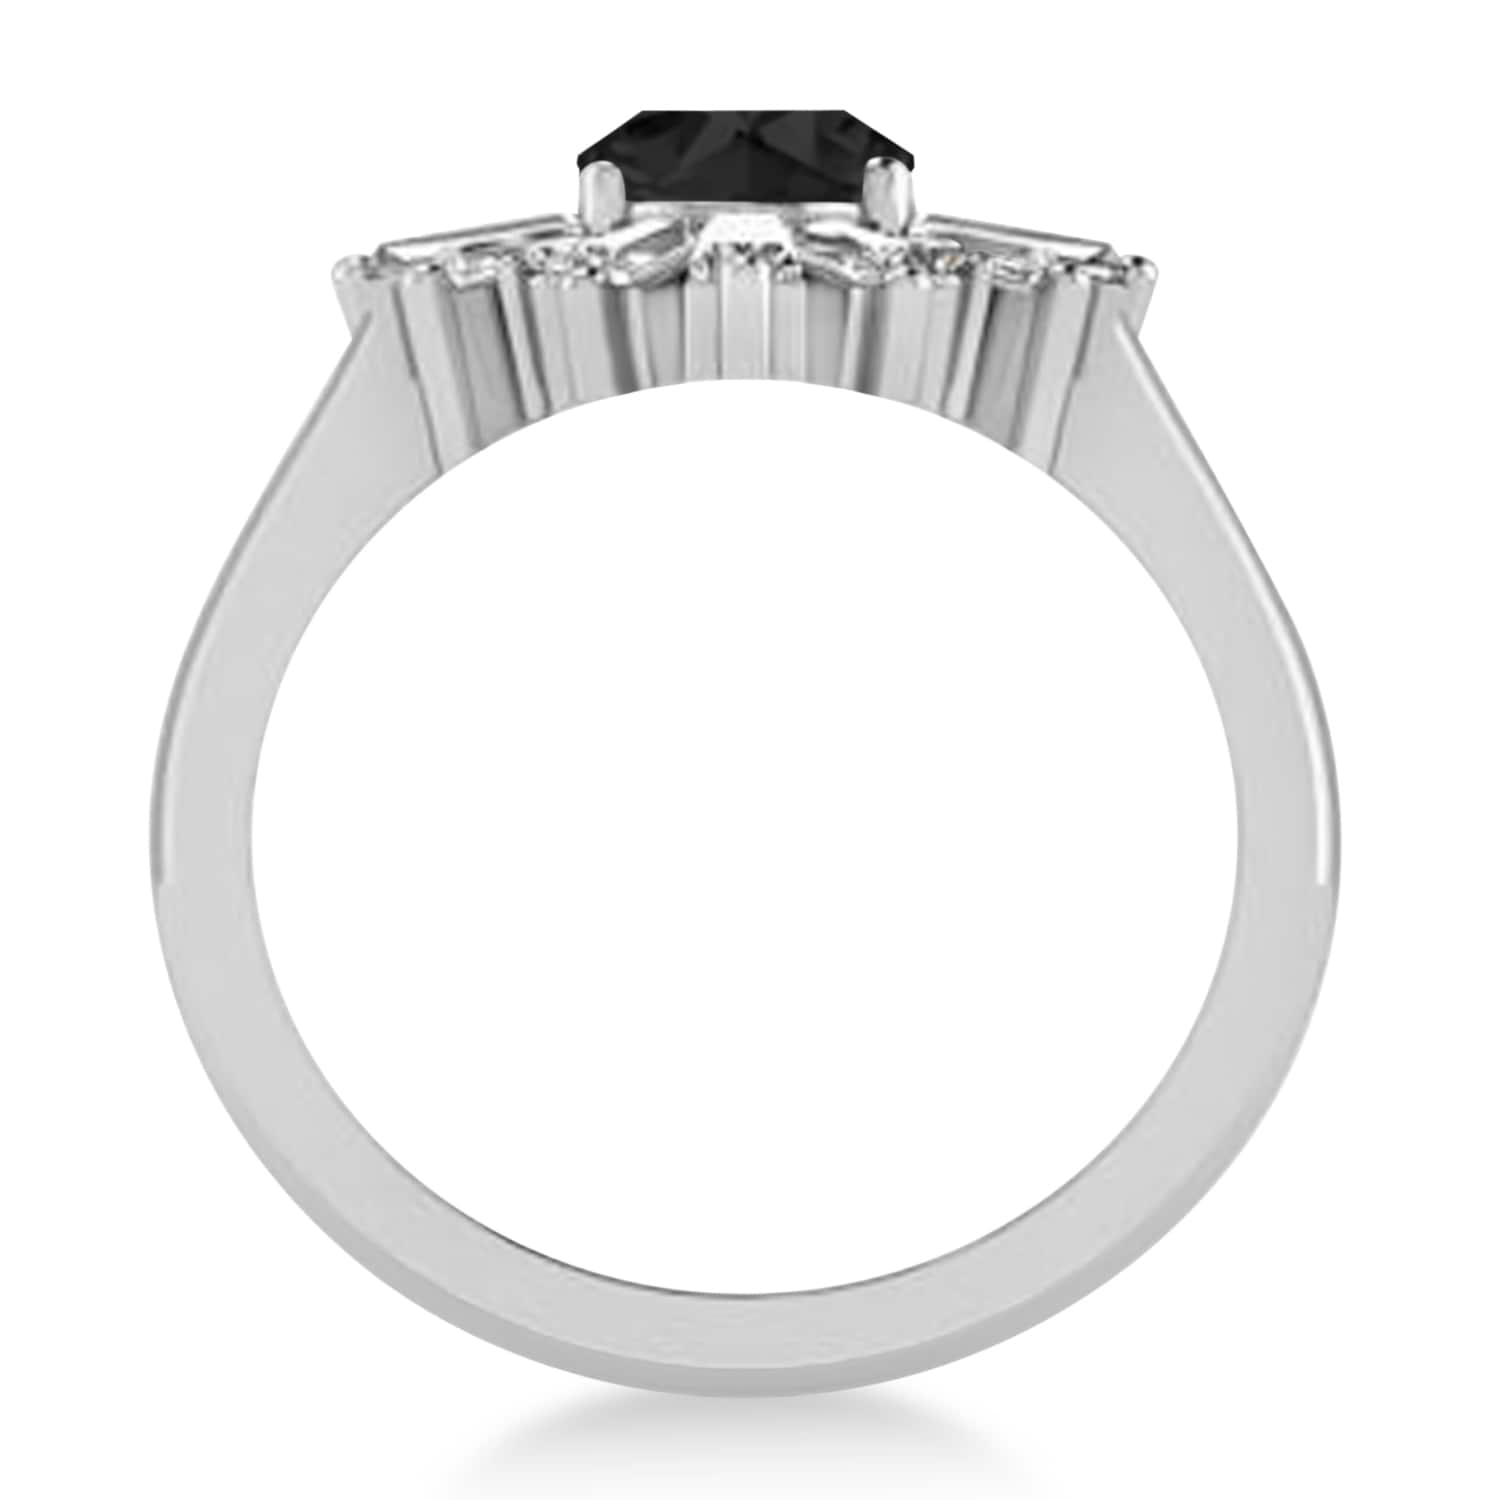 Black Diamond Oval Cut Ballerina Engagement Ring Platinum (2.51 ctw)